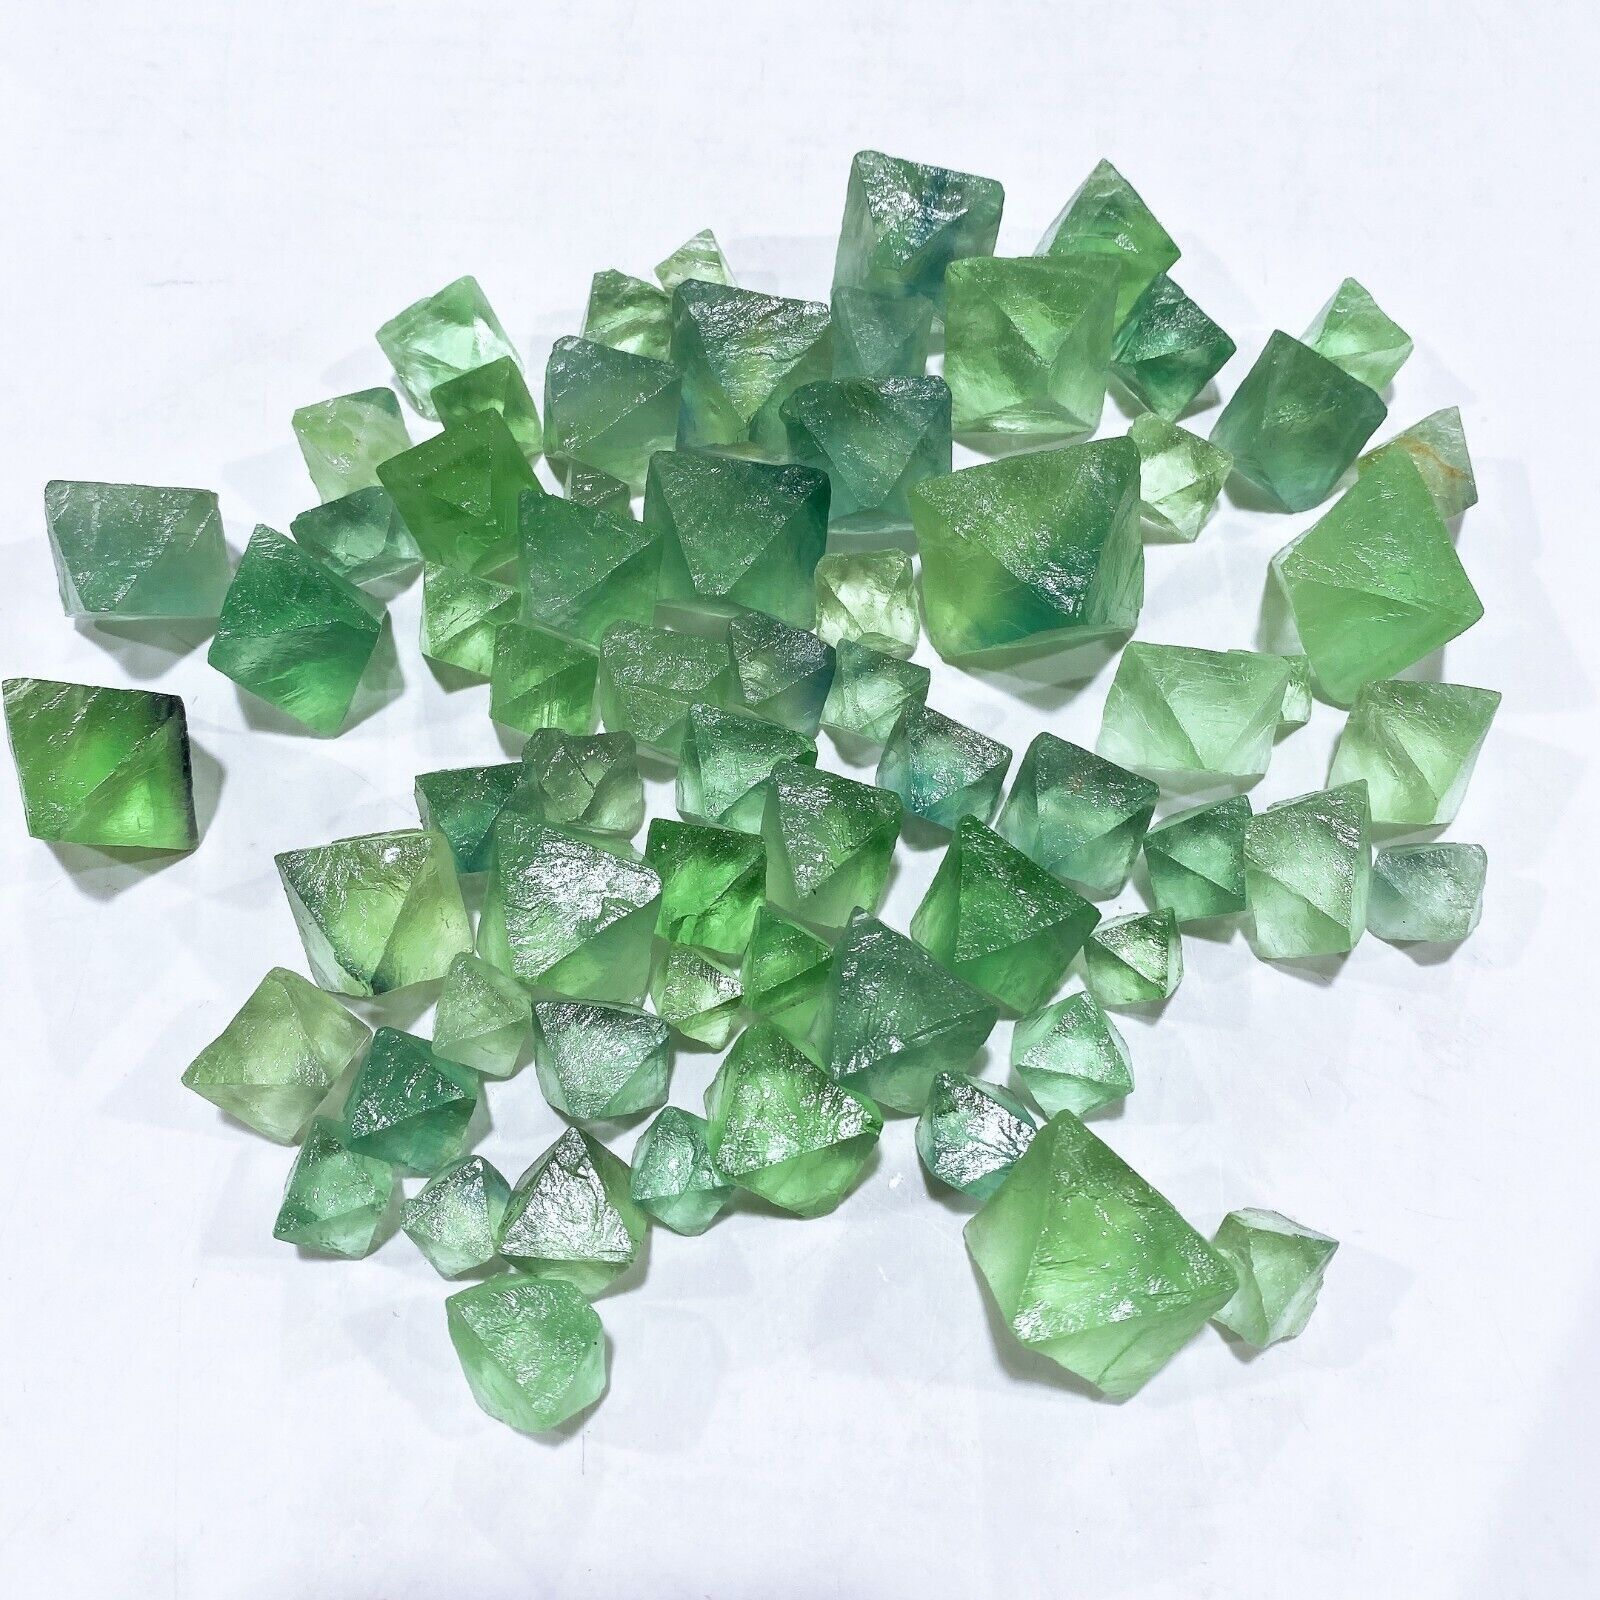 US 100g Natural Green Fluorite Octahedron Crystal Mineral Crystal Reiki Healing